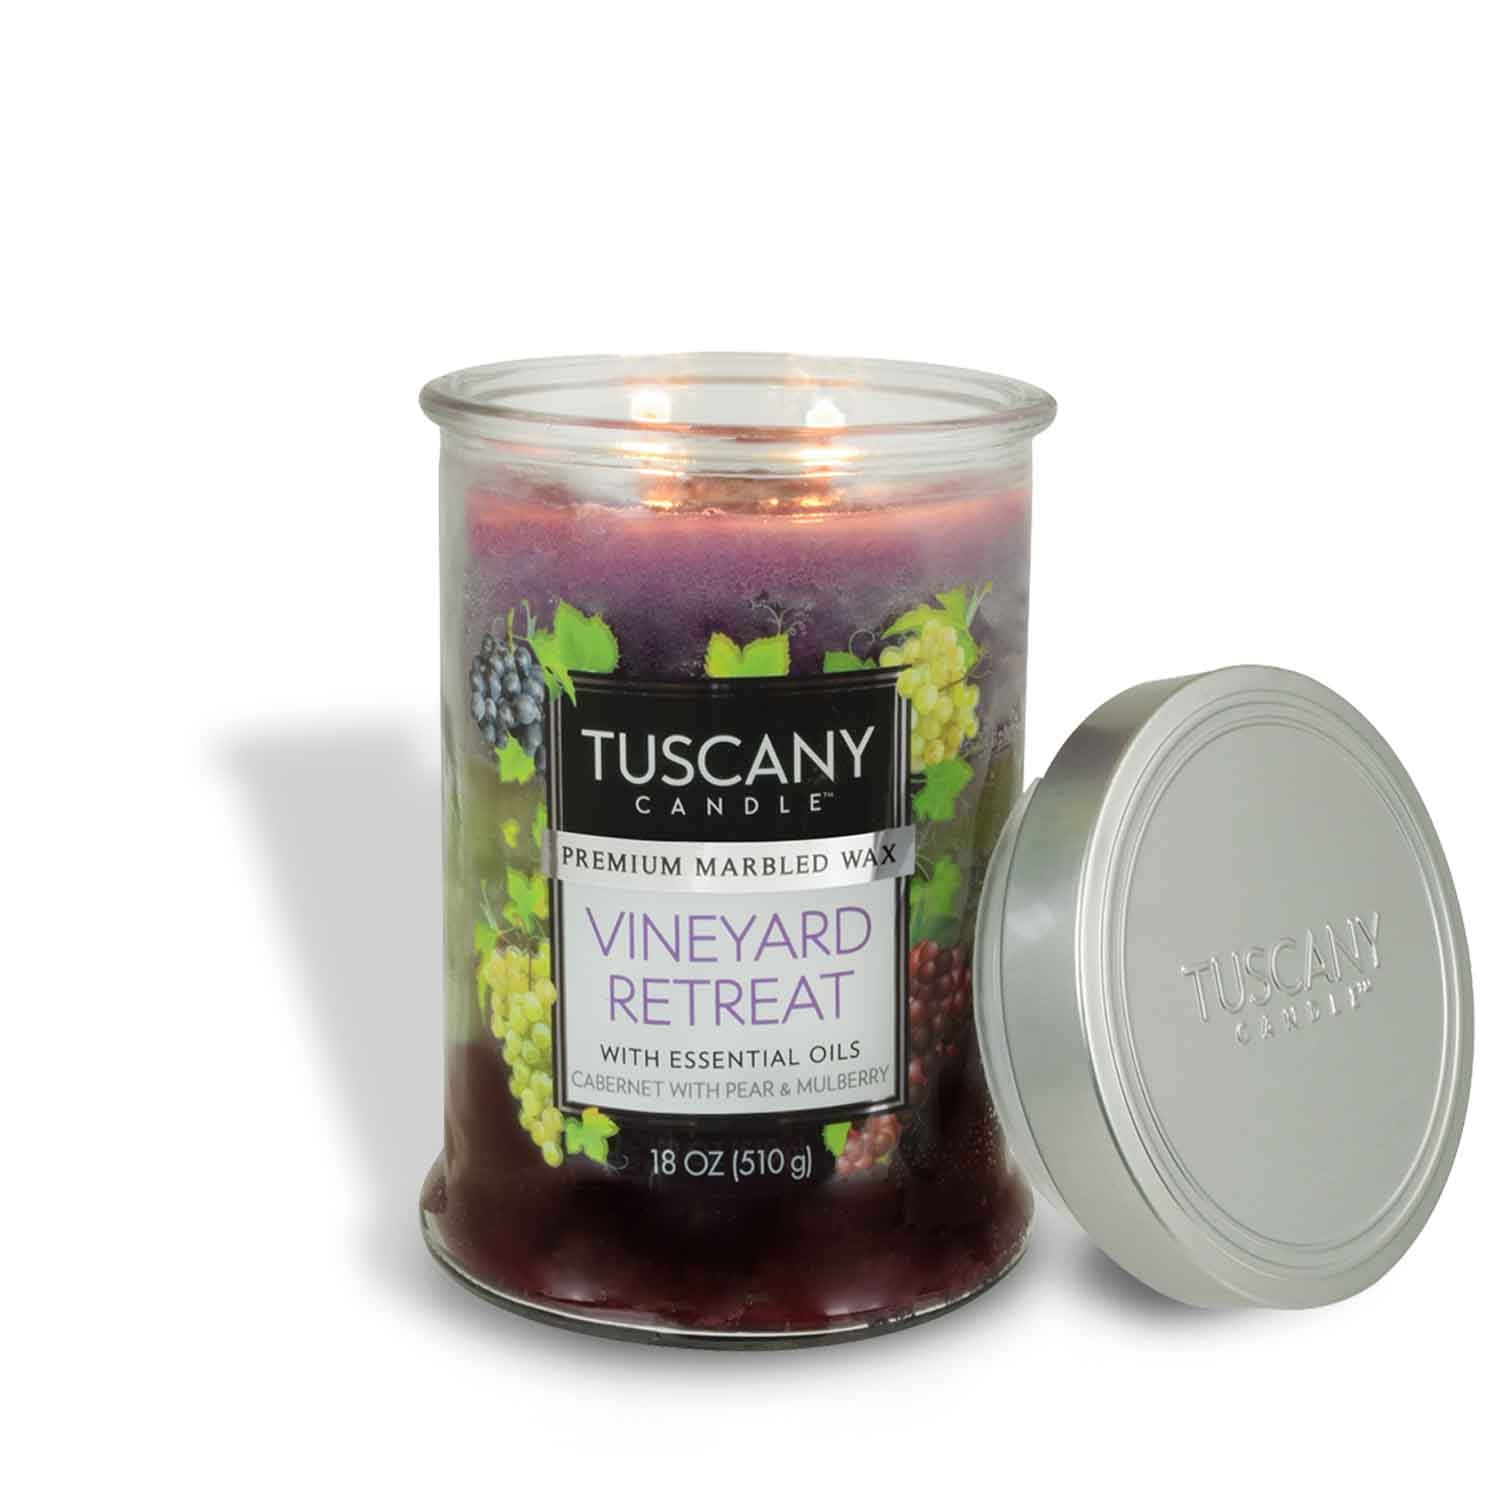 Tuscany Candle Vineyard Retreat Long-Lasting Scented Jar Candle (18 oz).